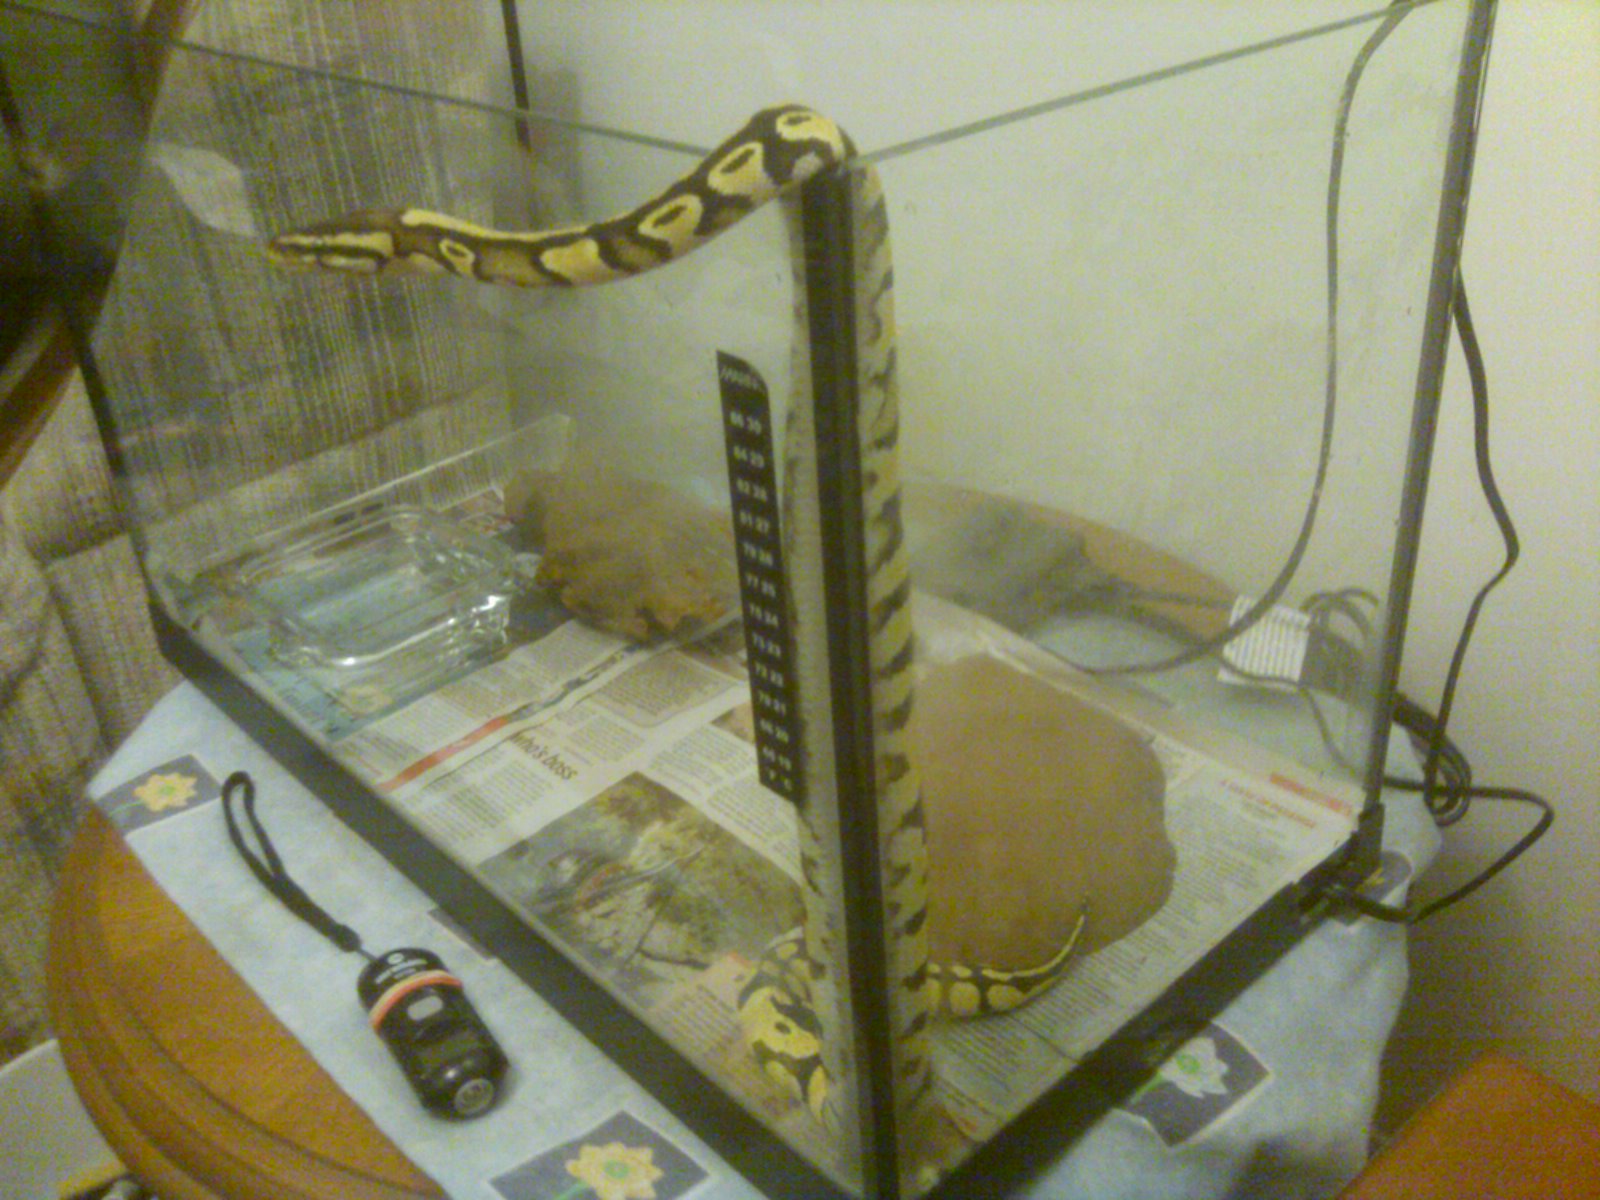 My first Snake